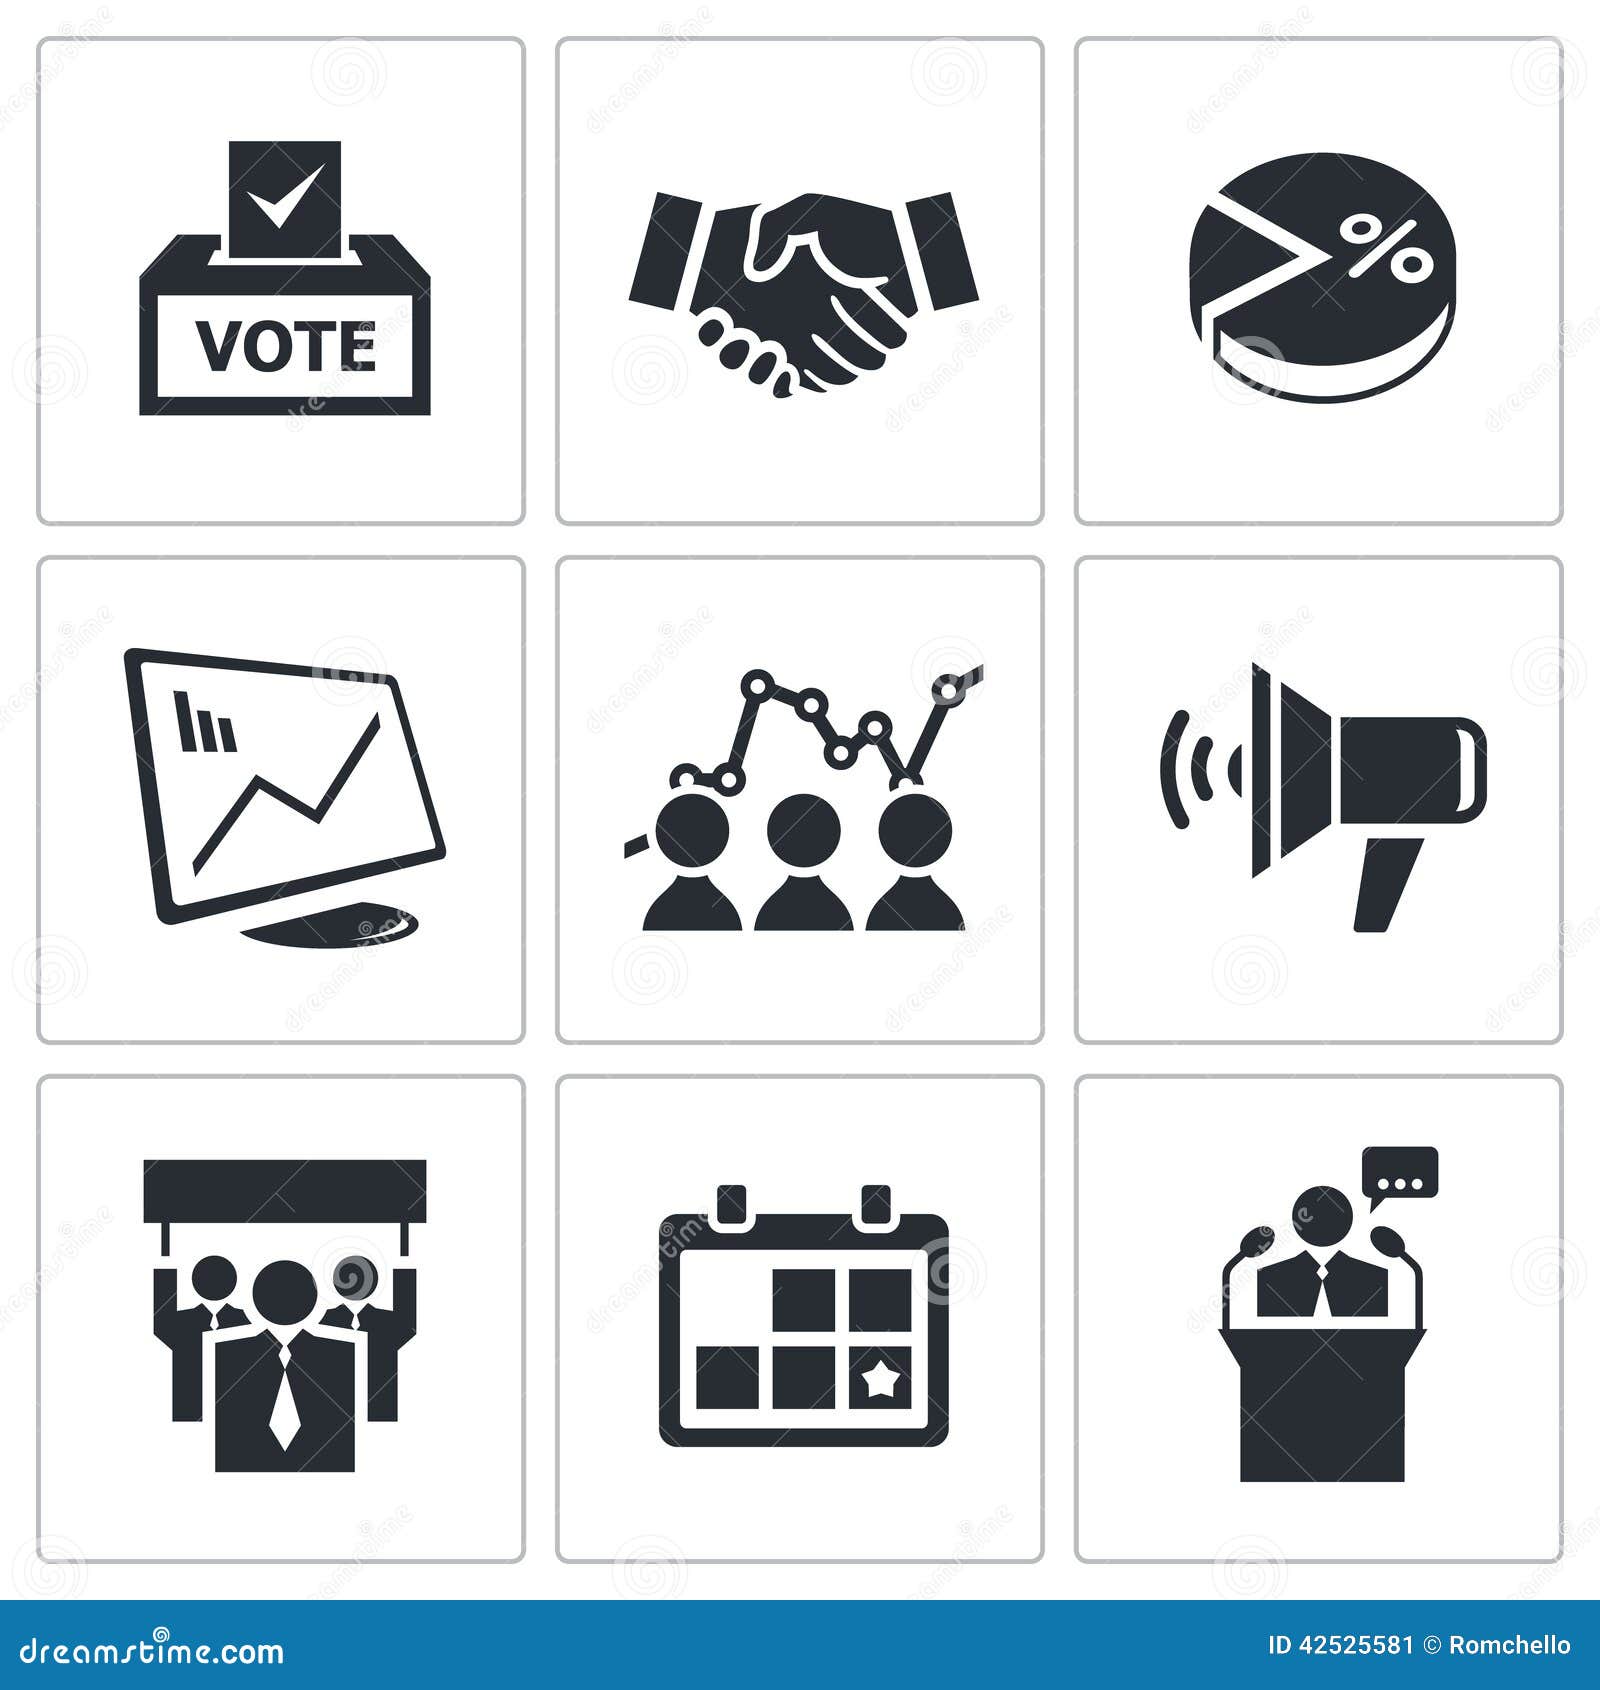 election icons set